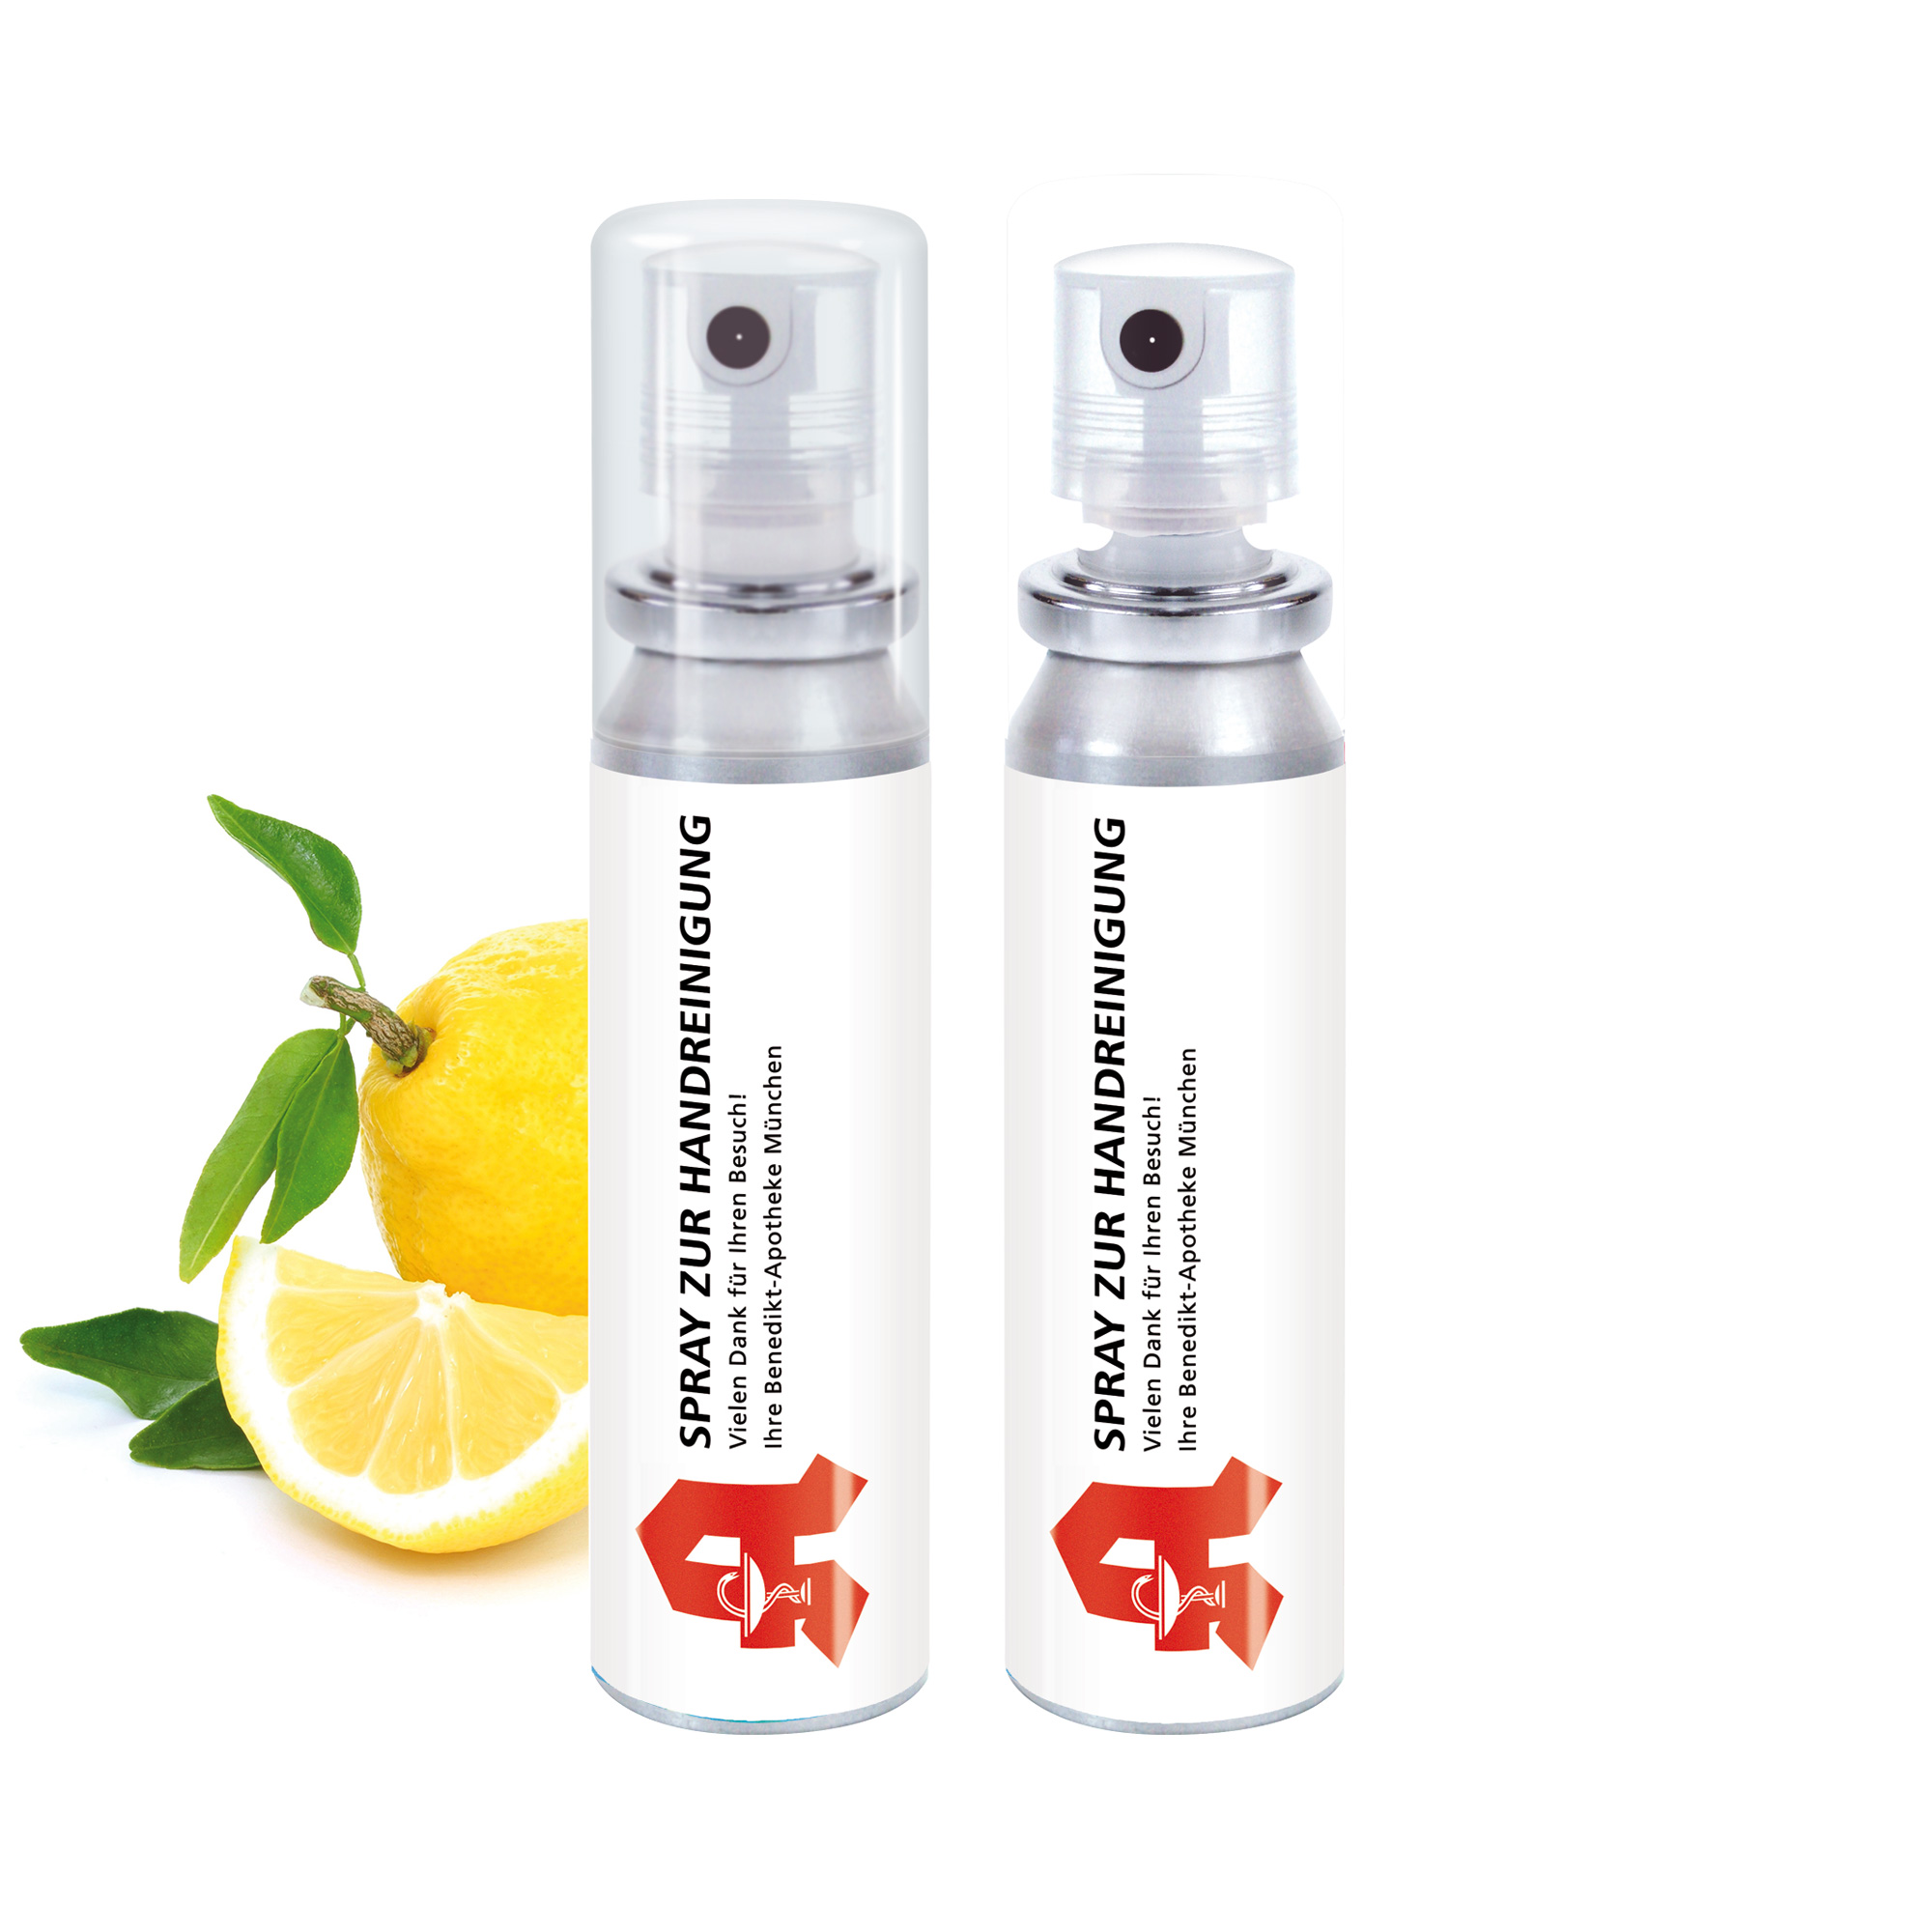 20 ml Pocket Spray - Handreinigungsspray antibakteriell - Body Label